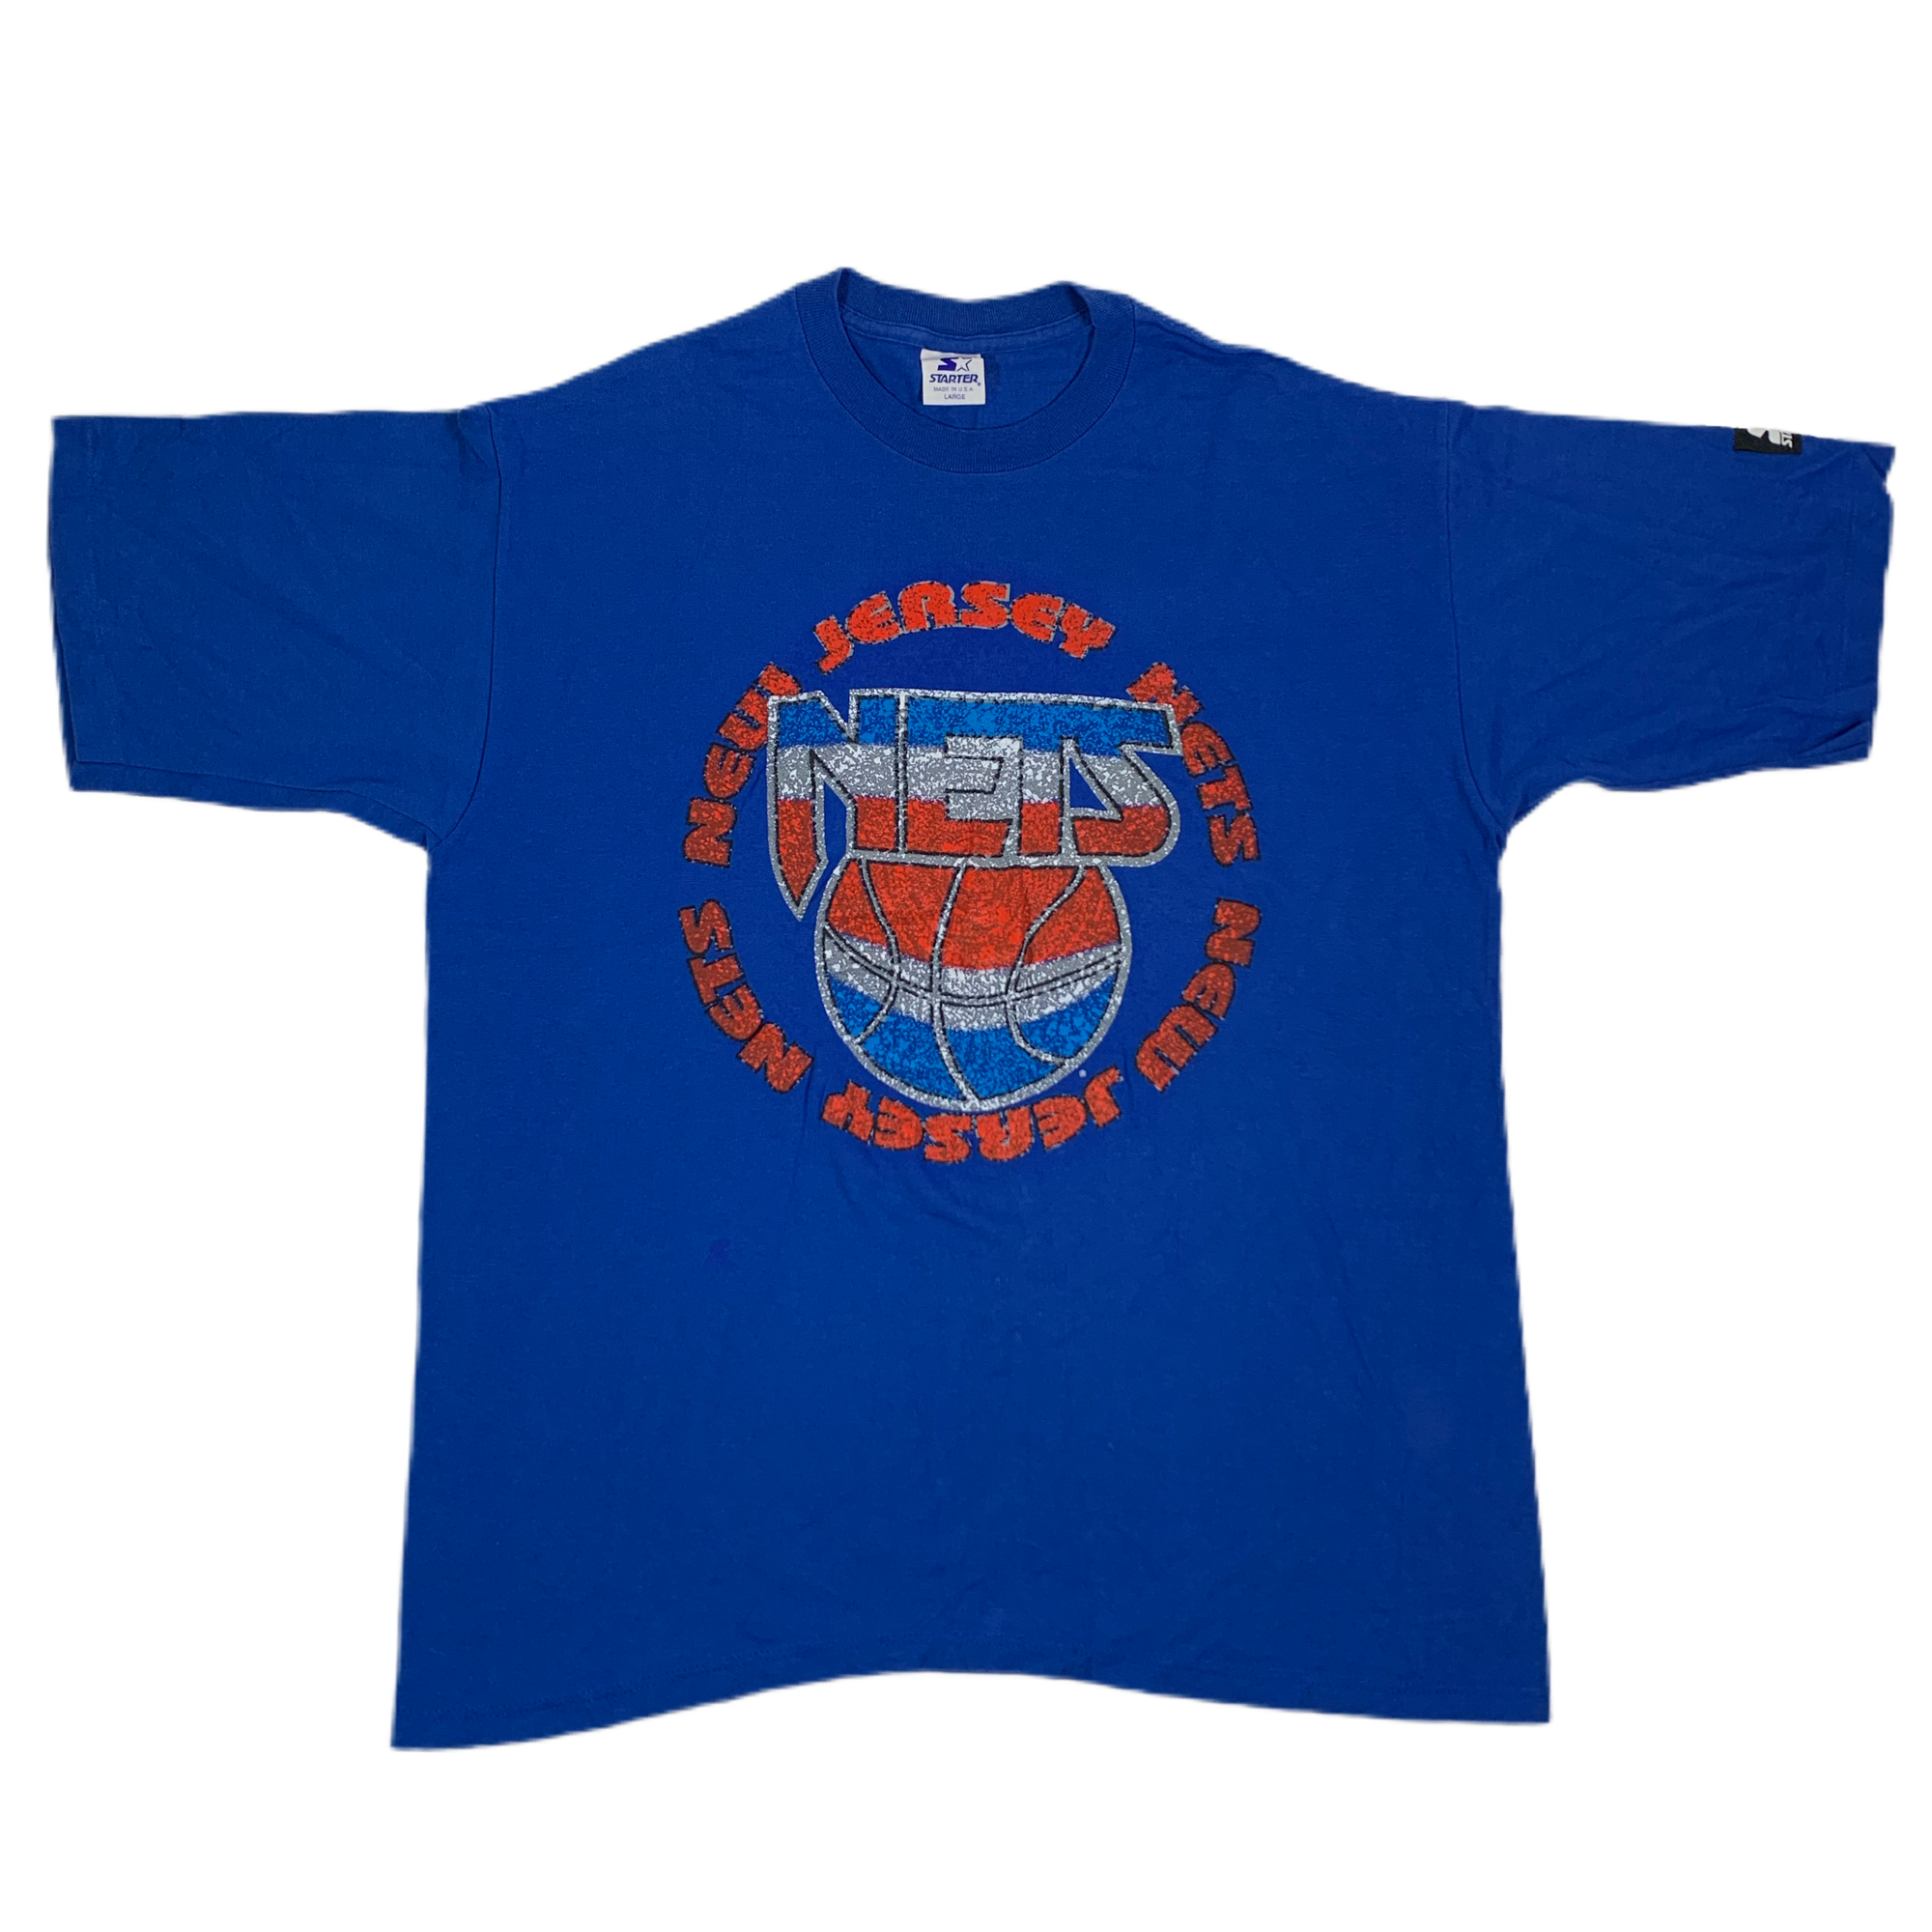 Vintage New Jersey Nets “Starter” T-Shirt - jointcustodydc